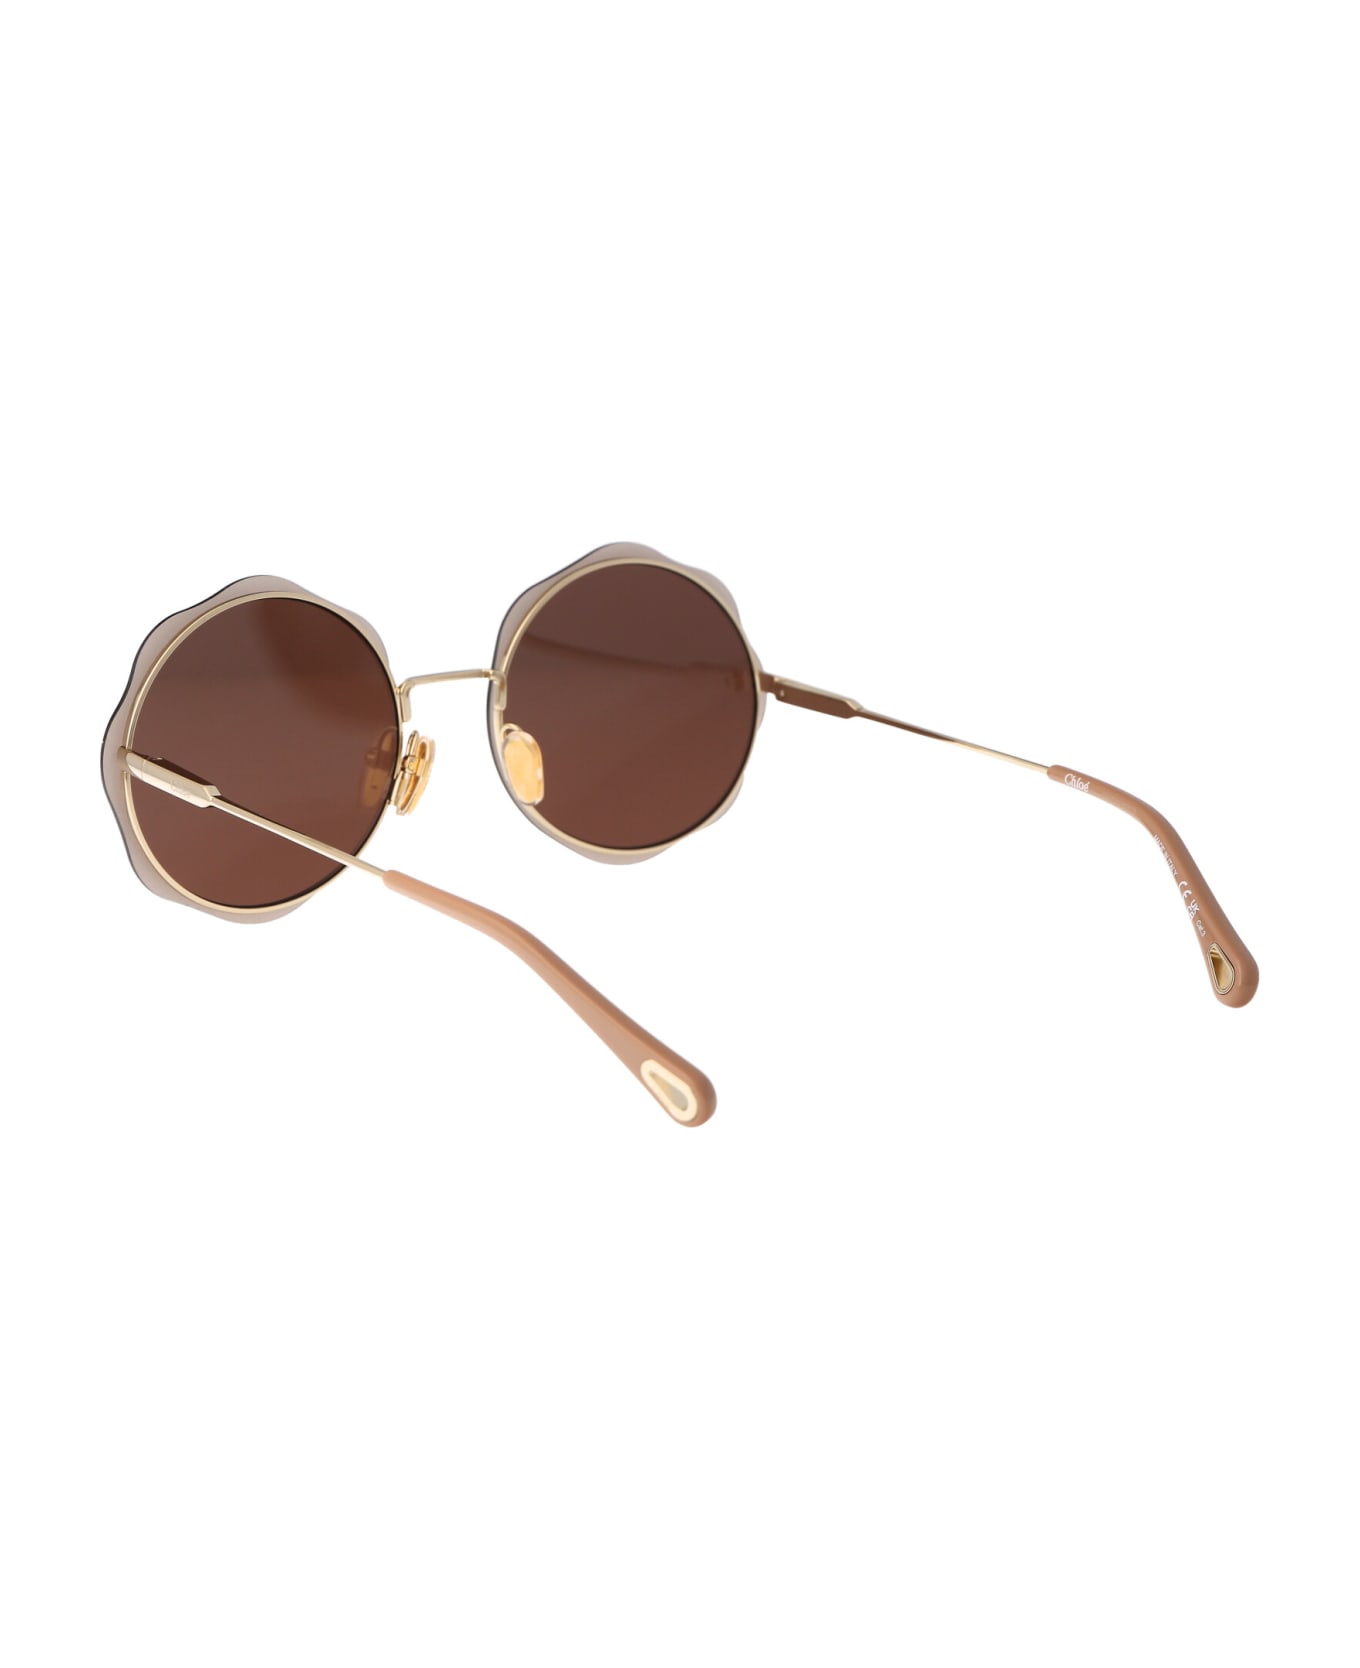 Chloé Eyewear Ch0202s Sunglasses - 004 GOLD GOLD BROWN サングラス